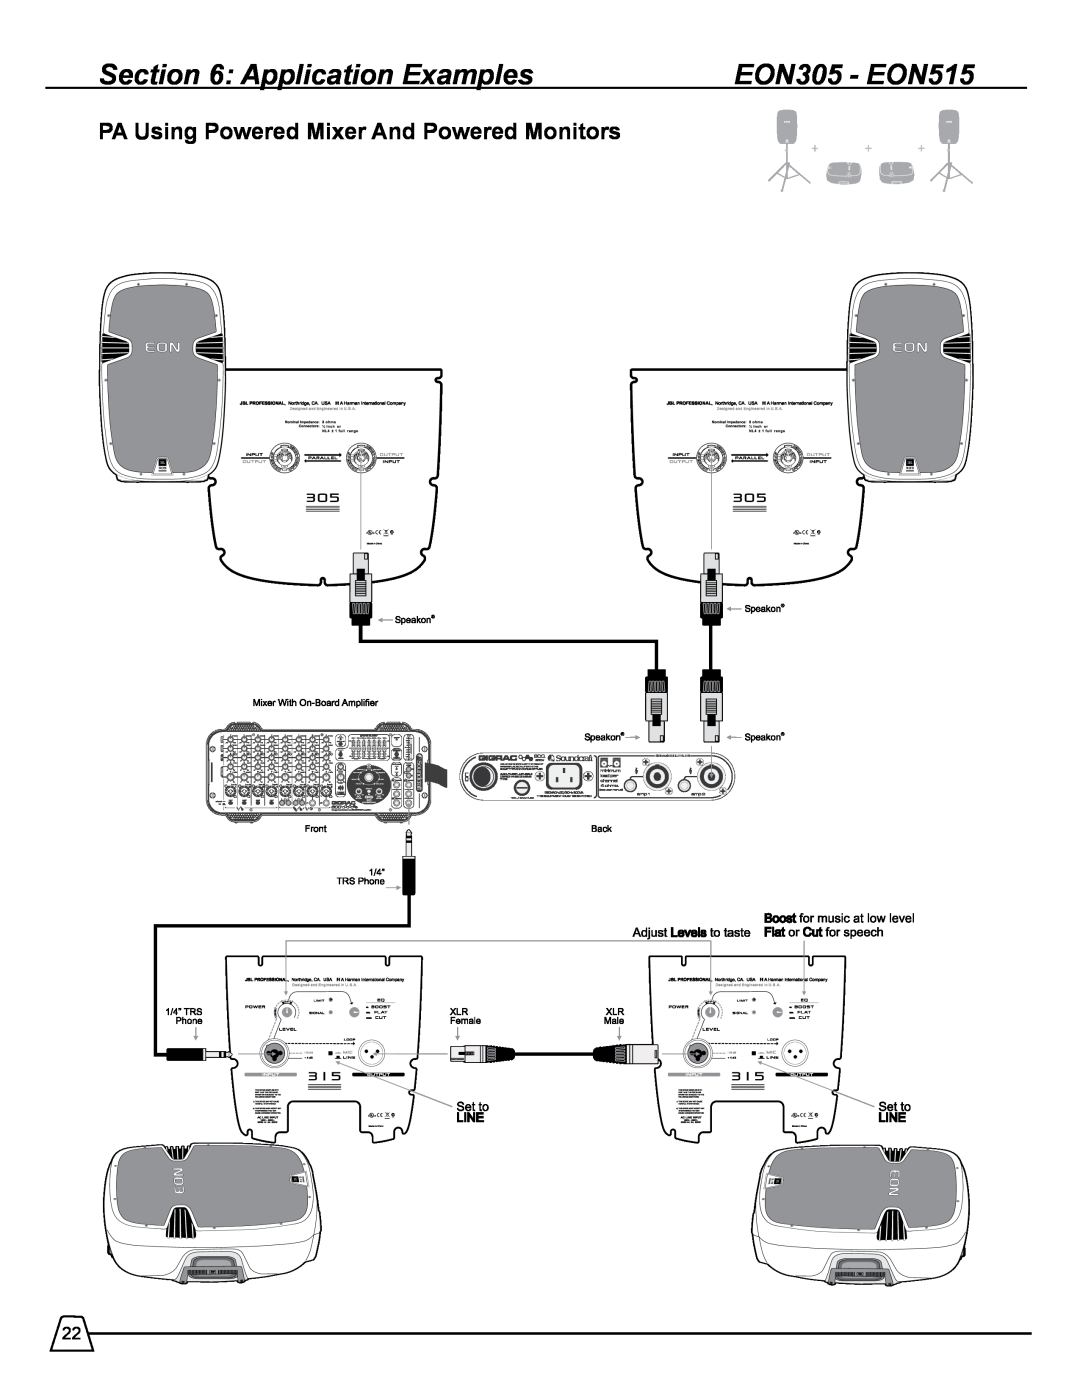 Harman 518S manual EON305 - EON515, PA Using Powered Mixer And Powered Monitors, Application Examples 